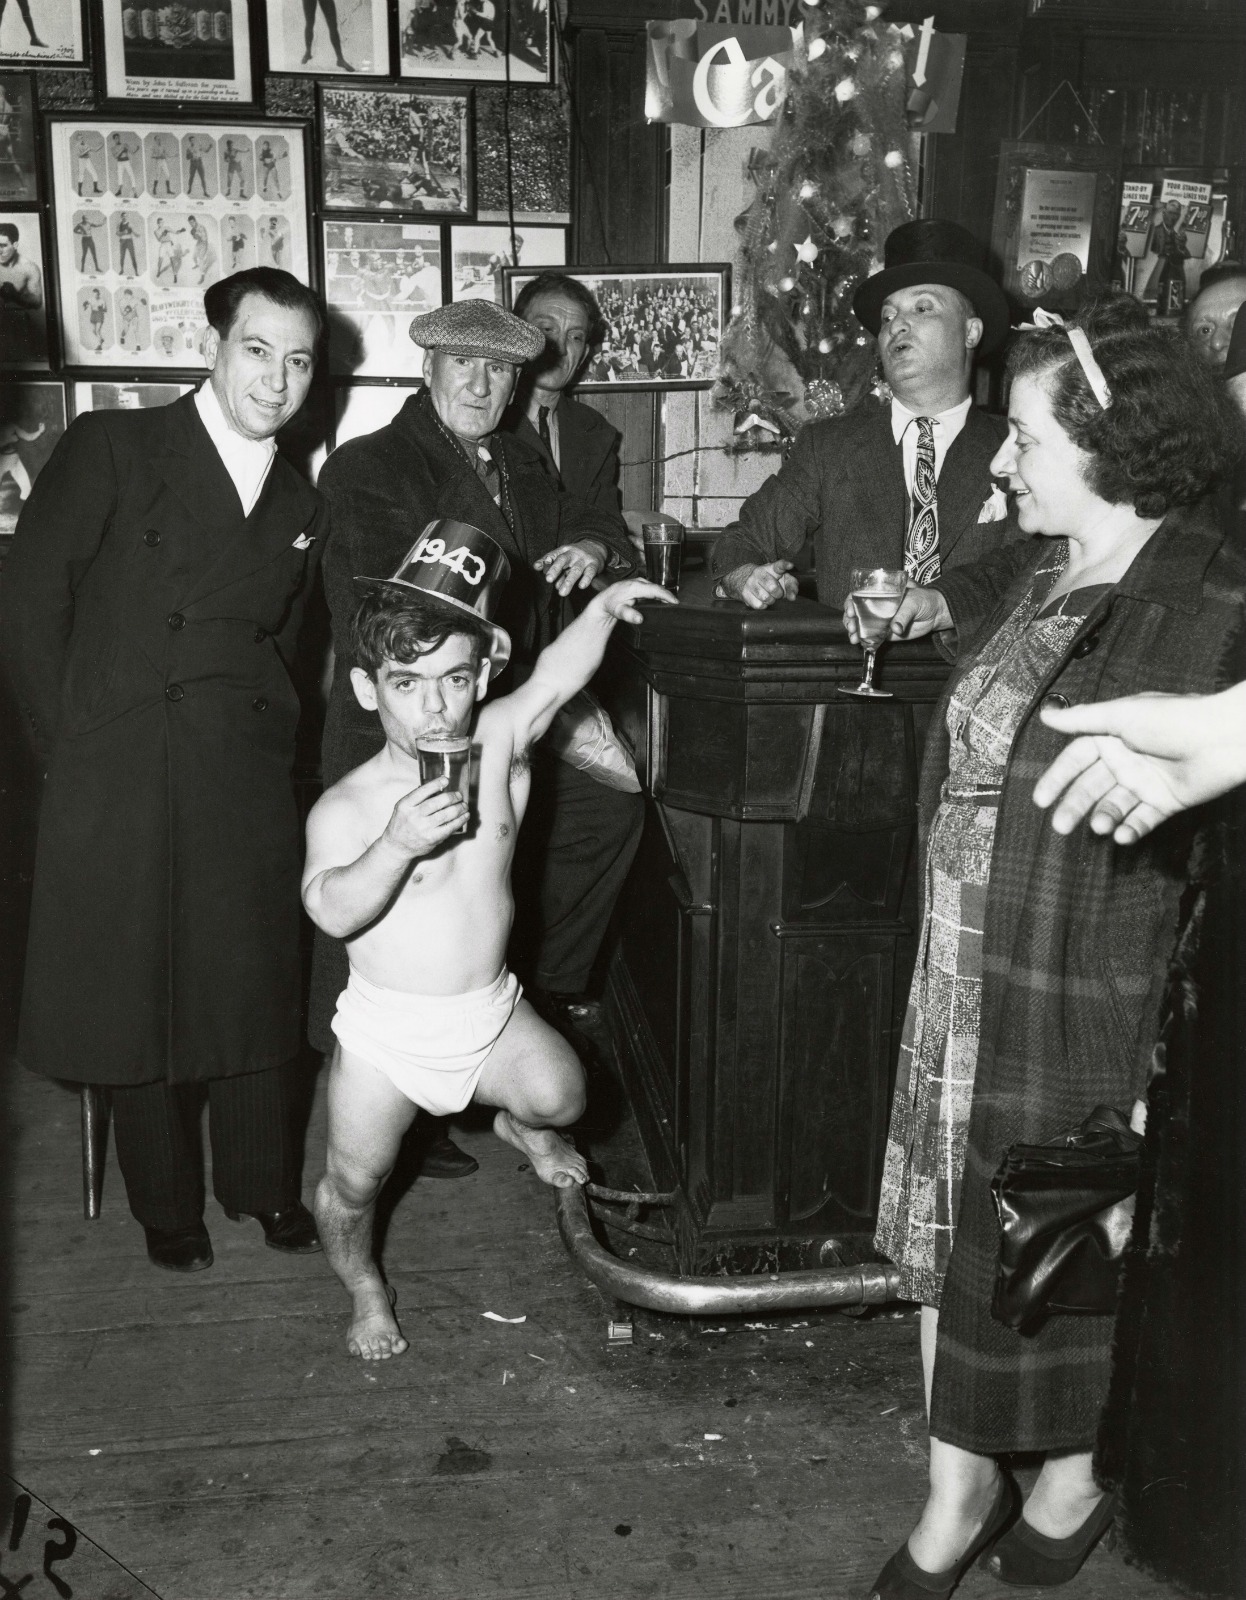 Shorty, the Bowery Cherub, New Year's Eve at Sammy's Bar, New York, 1943, © Weegee / ICP